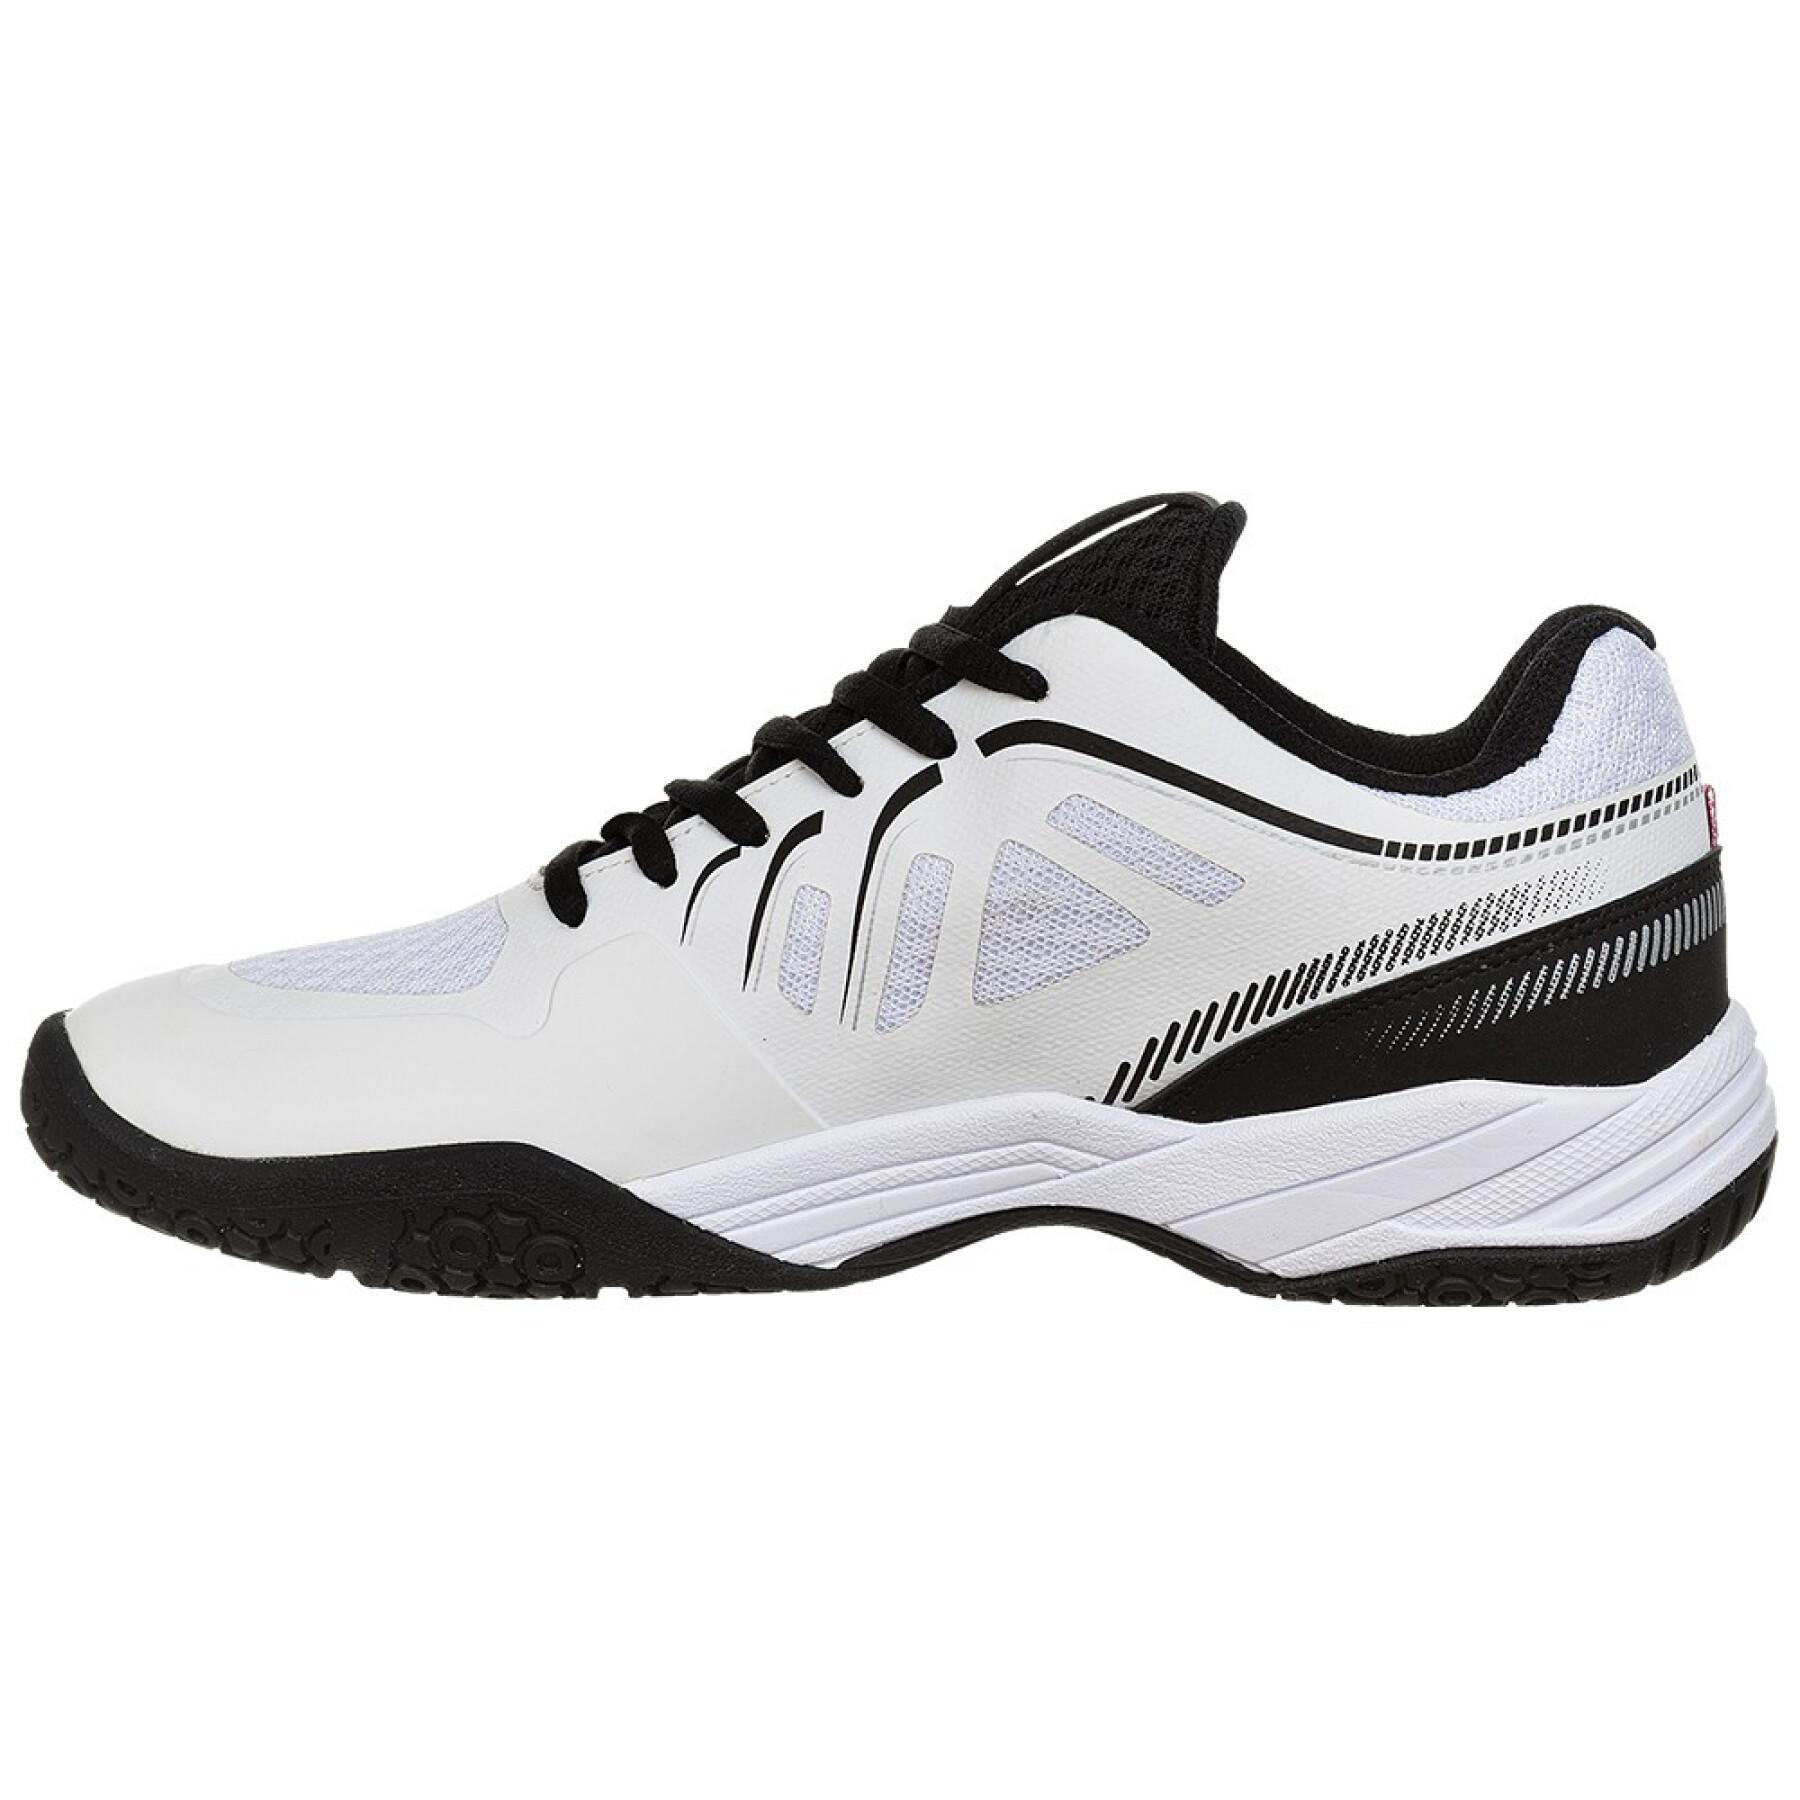 Badminton shoes FZ Forza Leander V3 1002